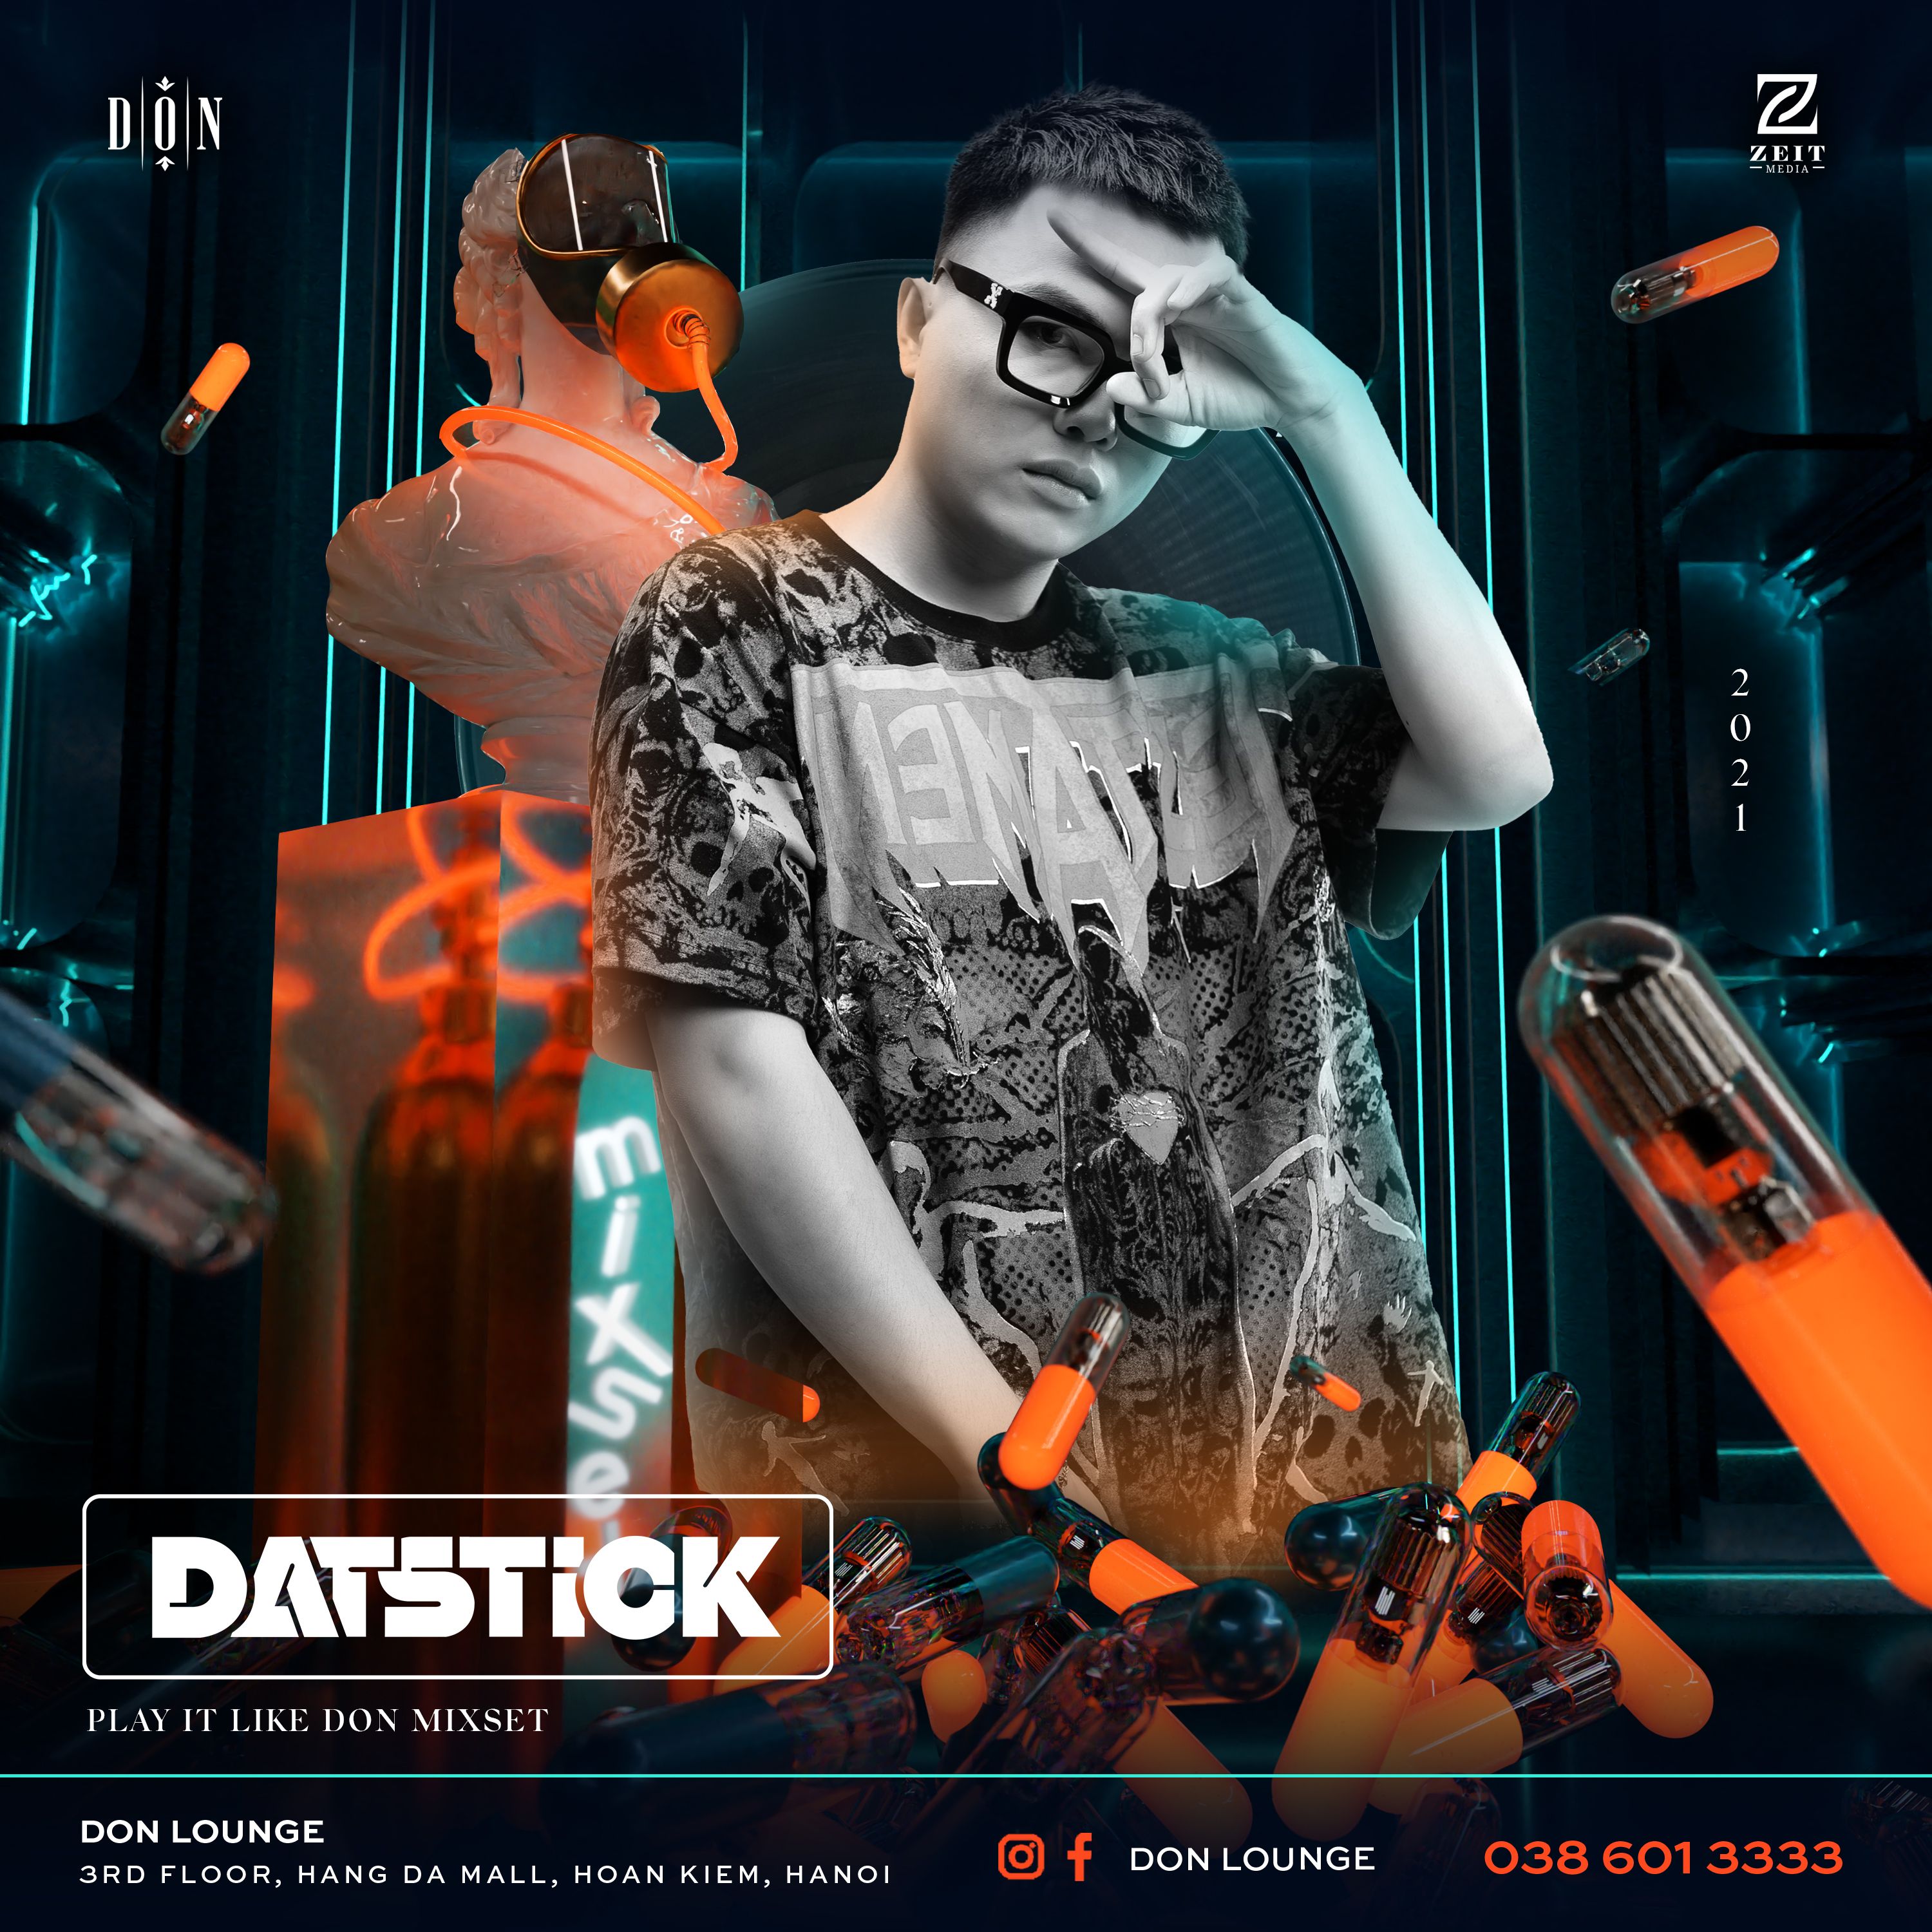 Download DON MIXSET || KEEP ROLLIN’ ON - DJ DATSTICK